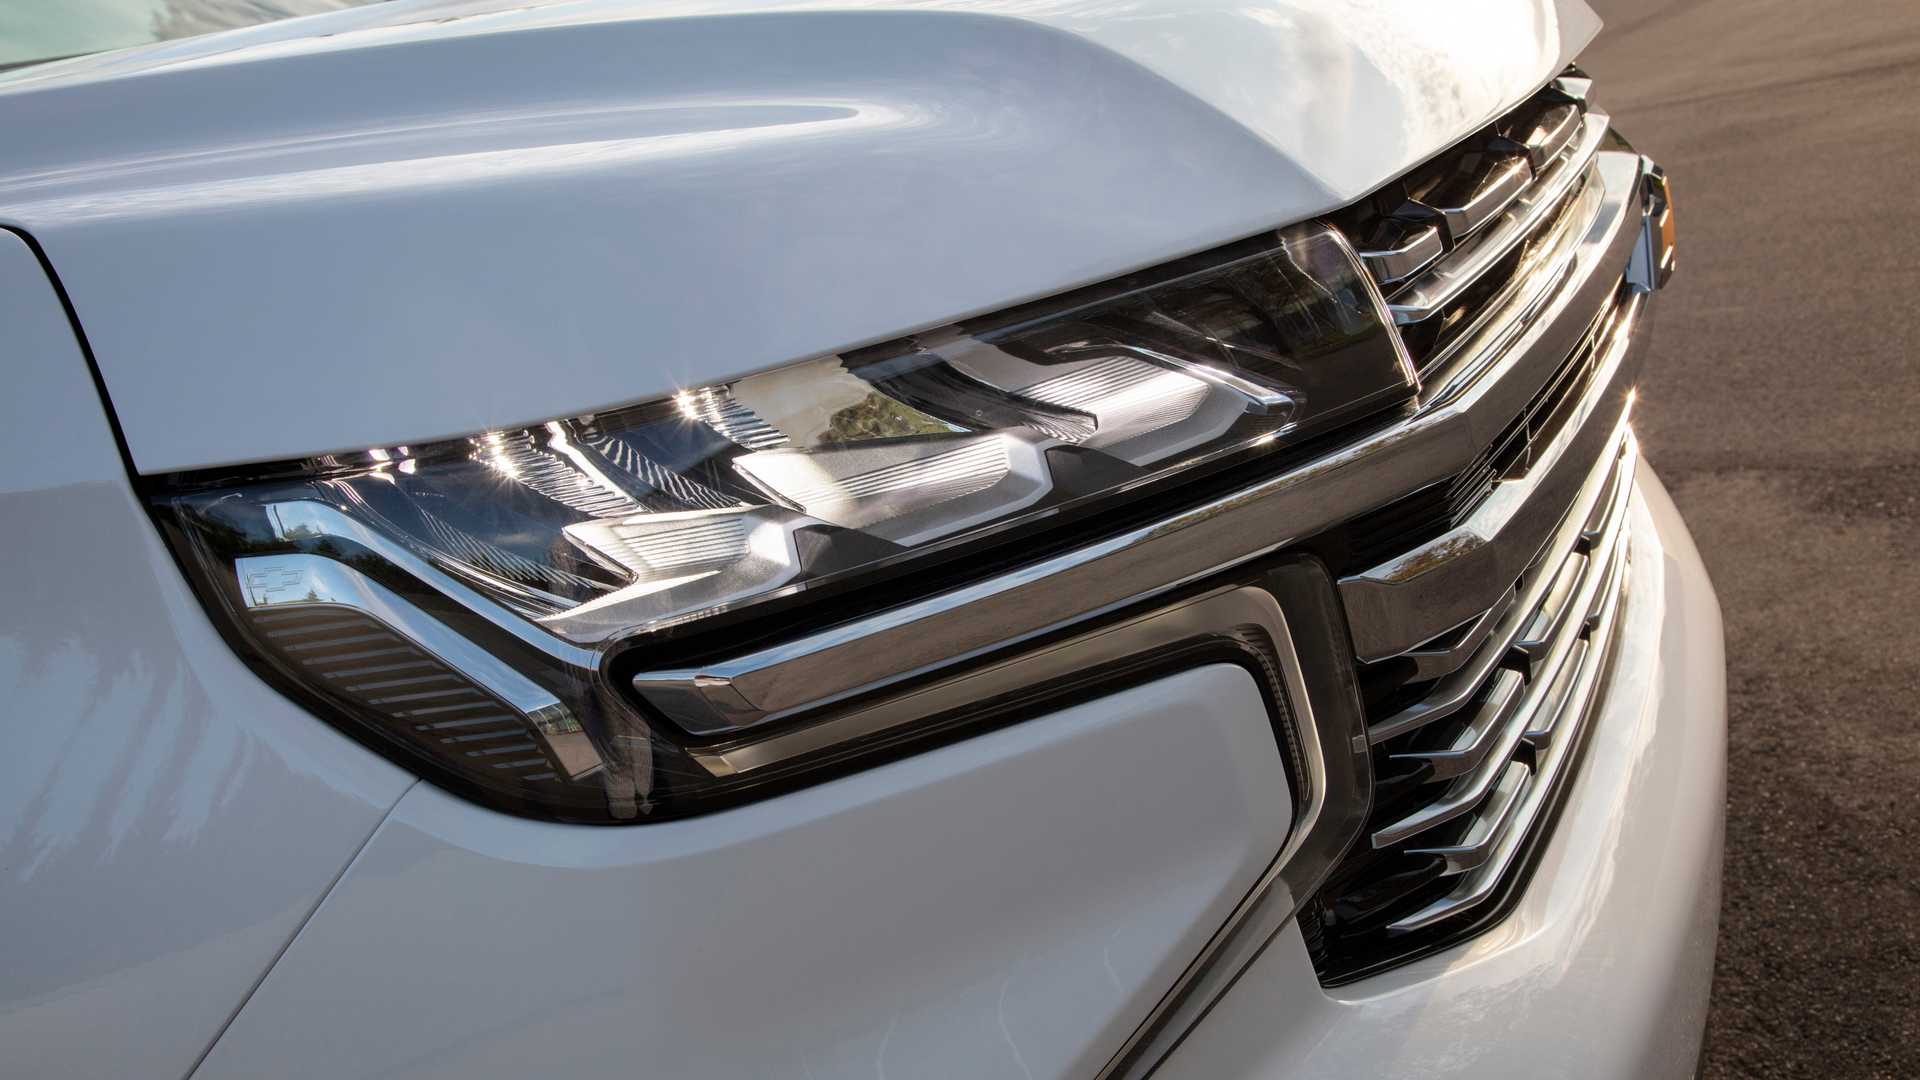 Chevrolet Suburban exterior - Headlight